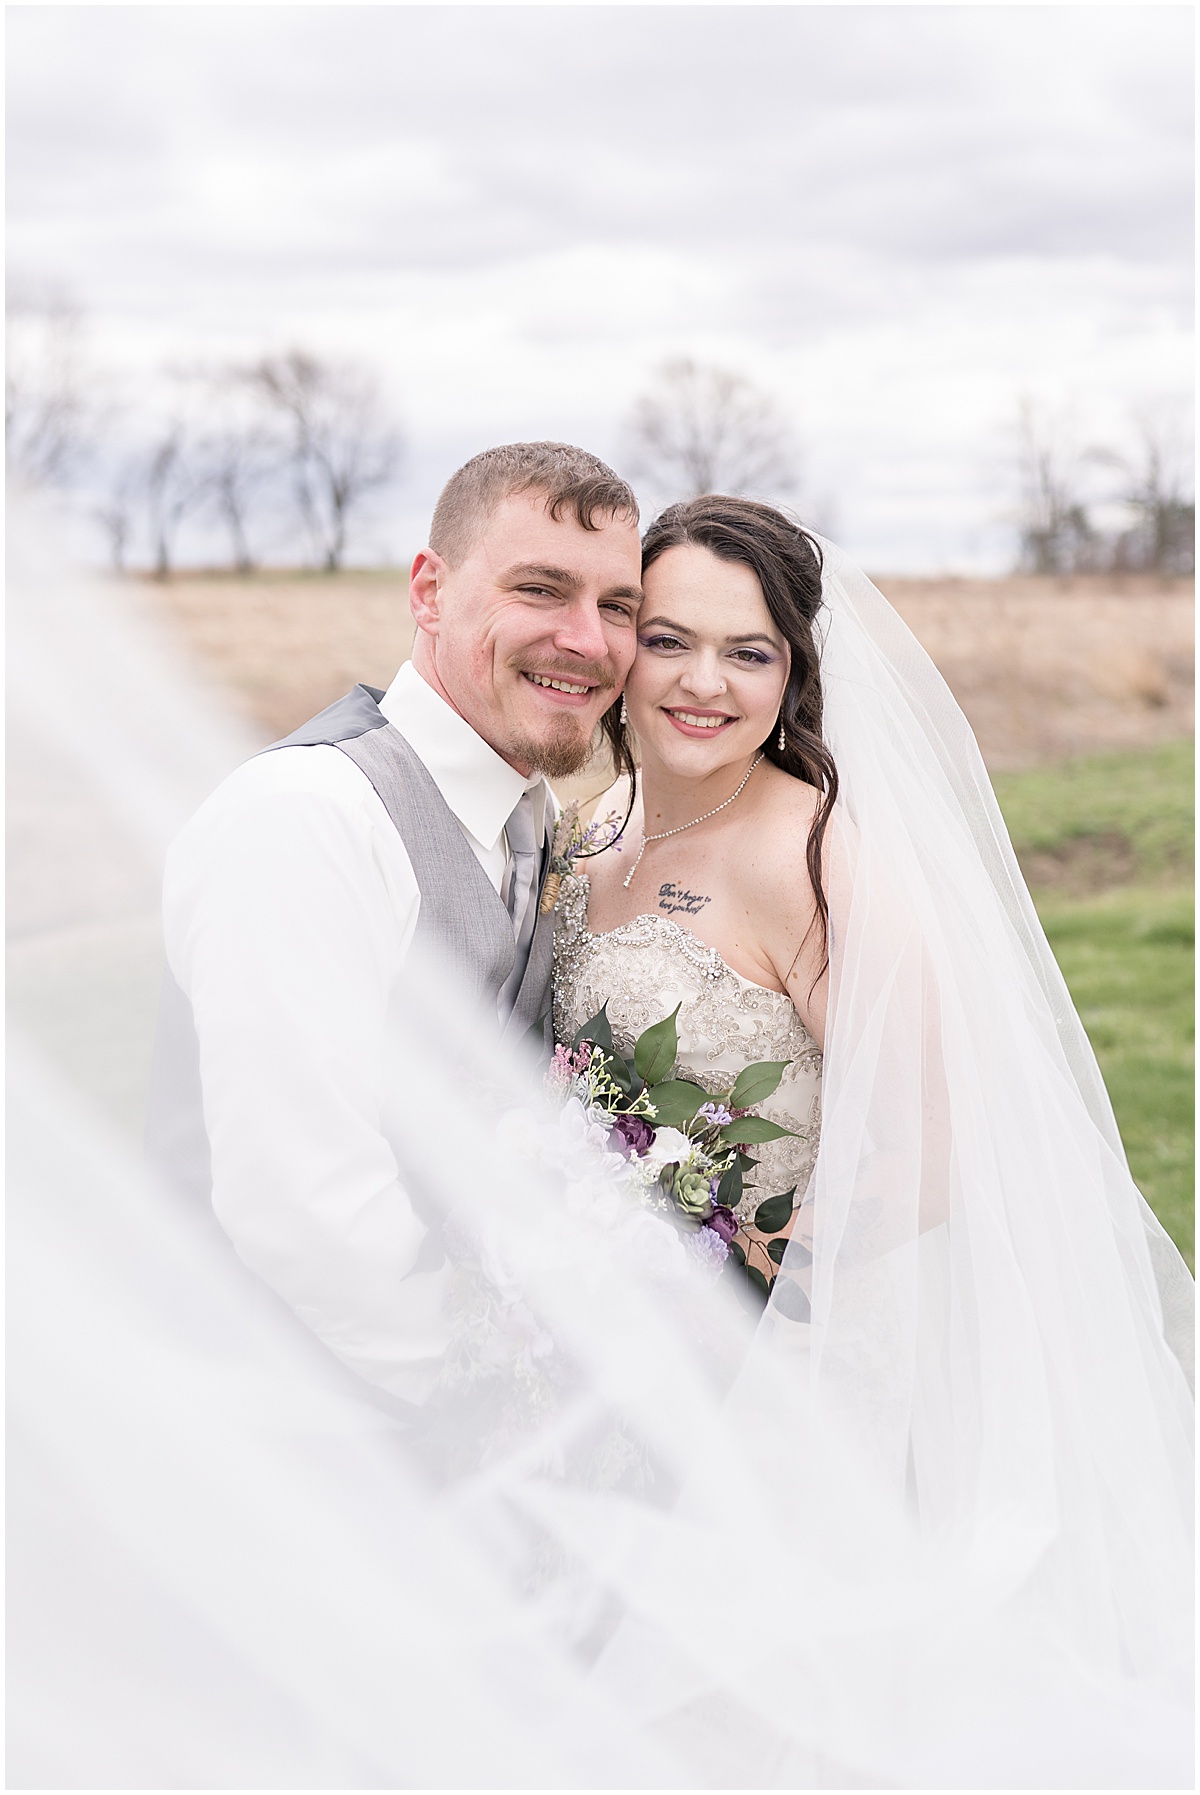 Bride and groom at wedding at Finkbiner Gala Barn in Veedersburg, Indiana